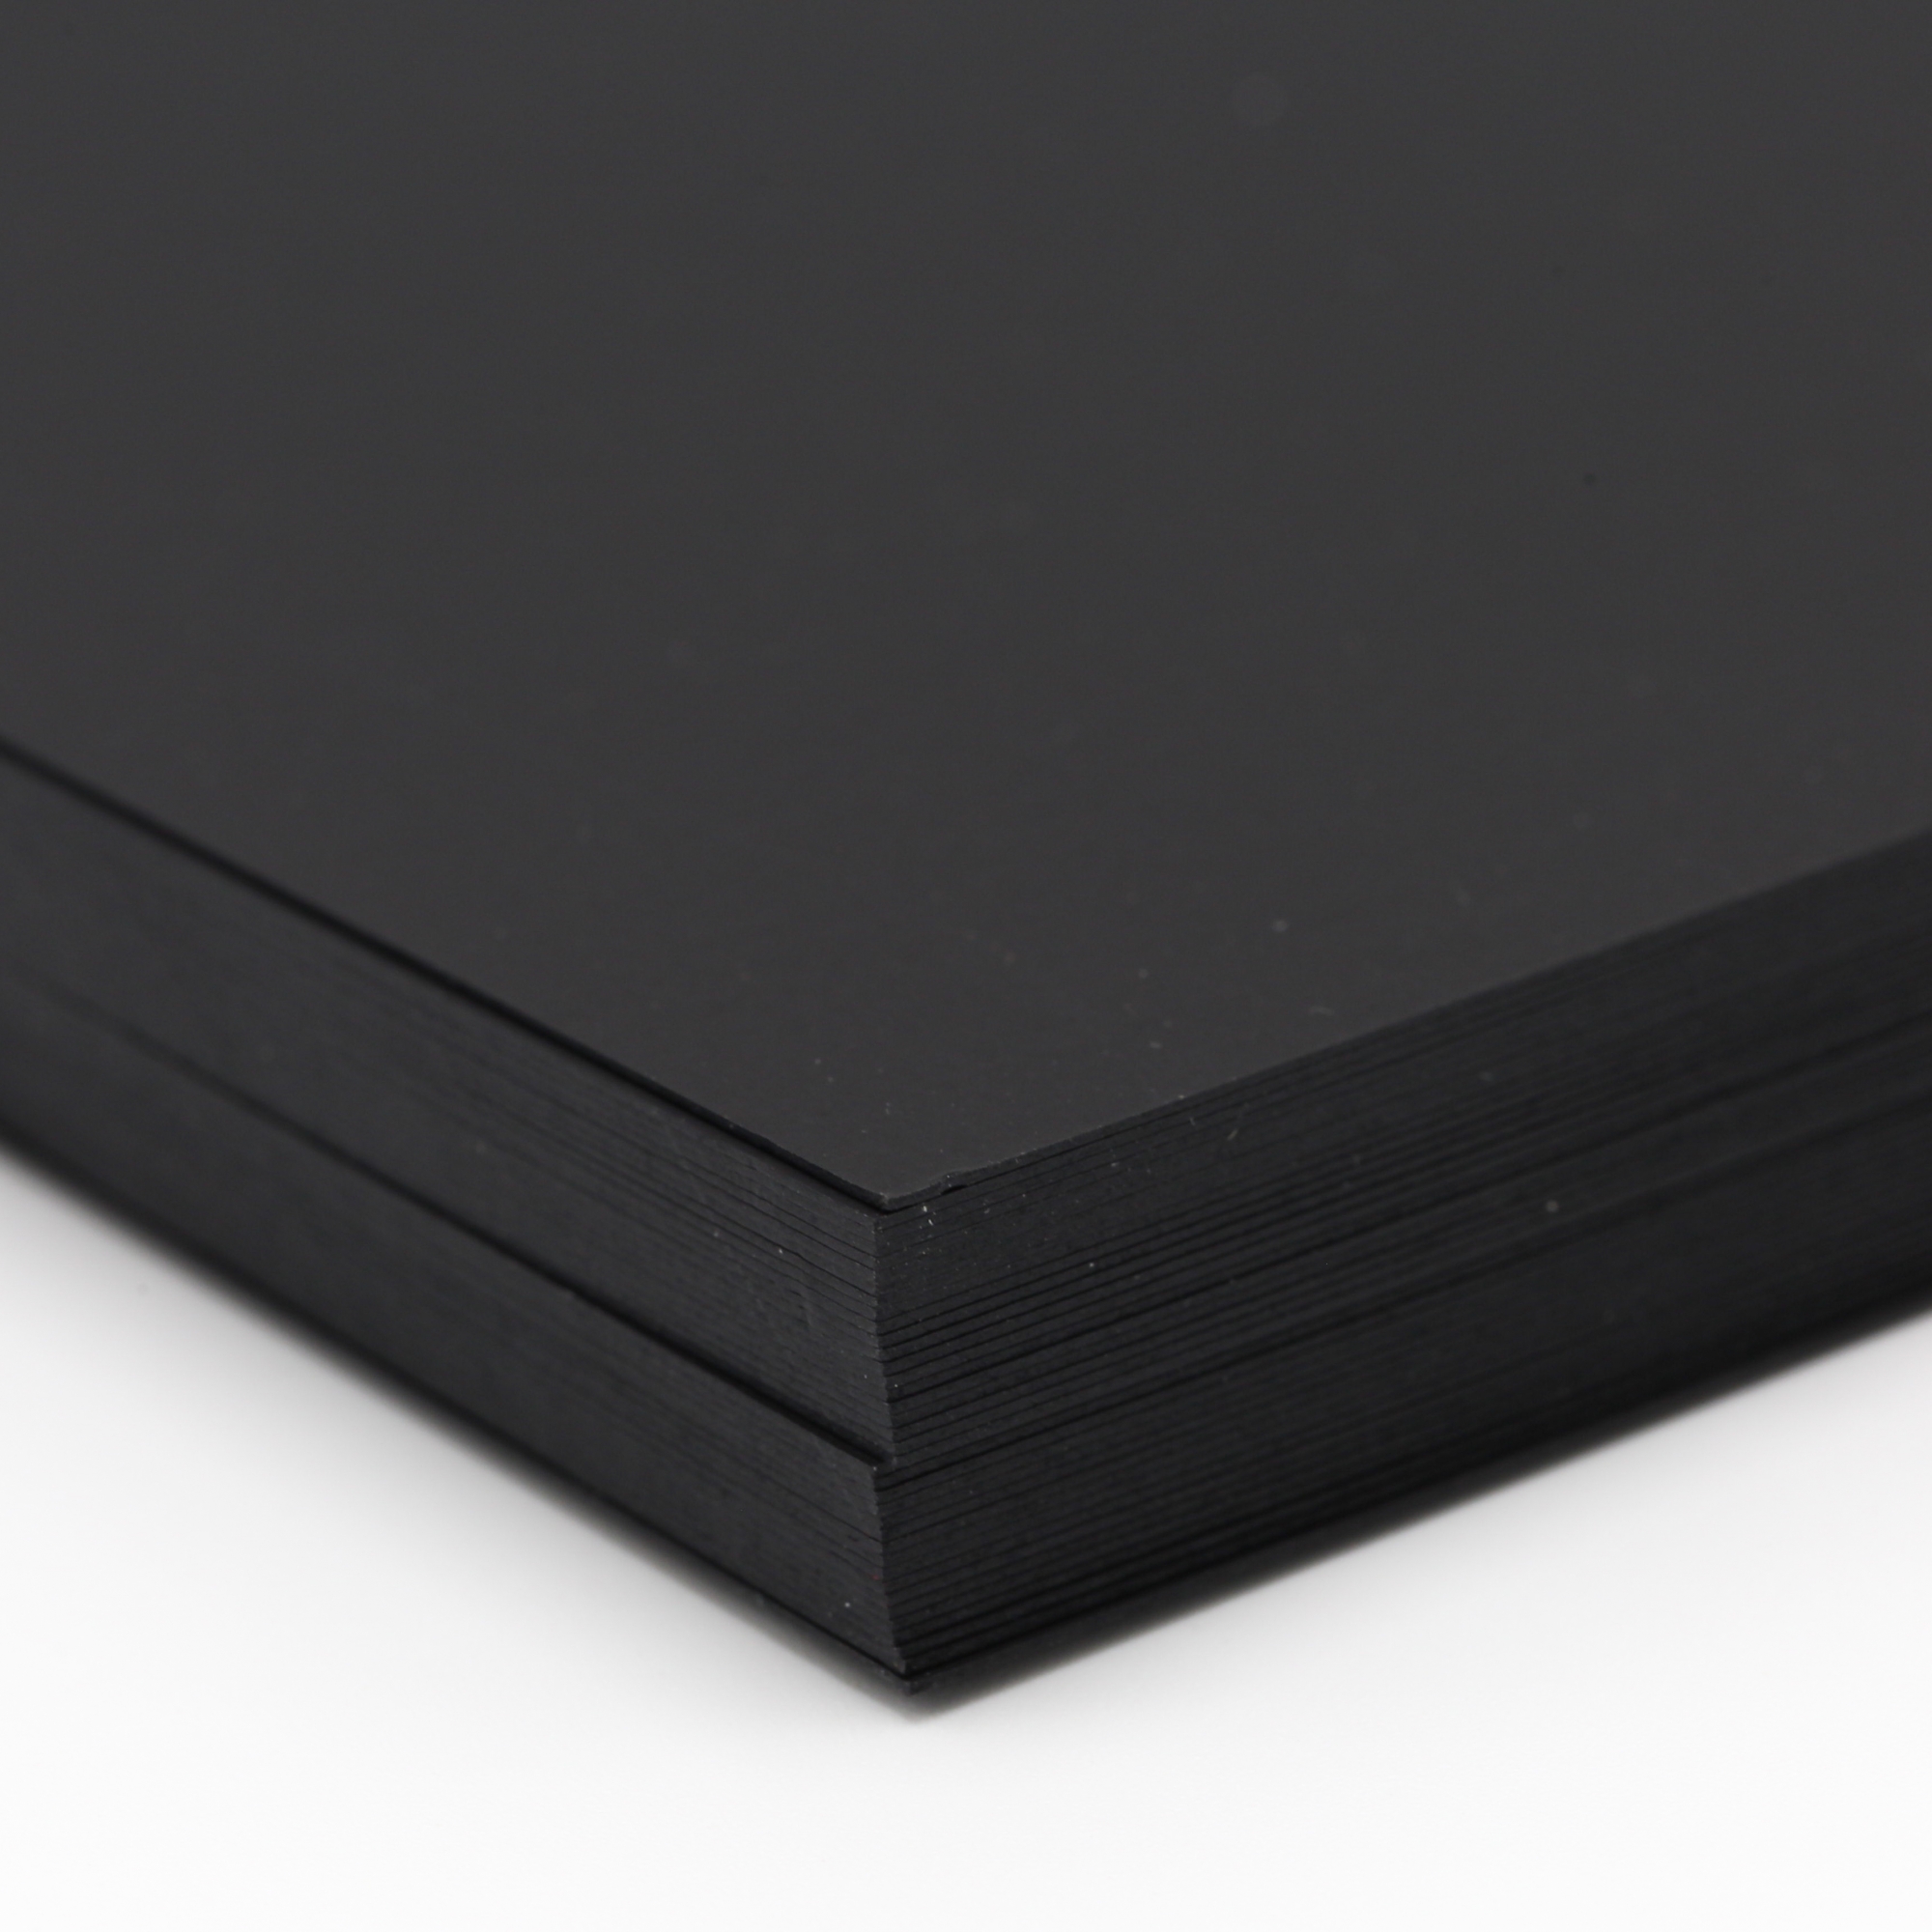 Plike Cover Black 11x17 122lb/330g 100/pkg, Paper, Envelopes, Cardstock &  Wide format, Quick shipping nationwide